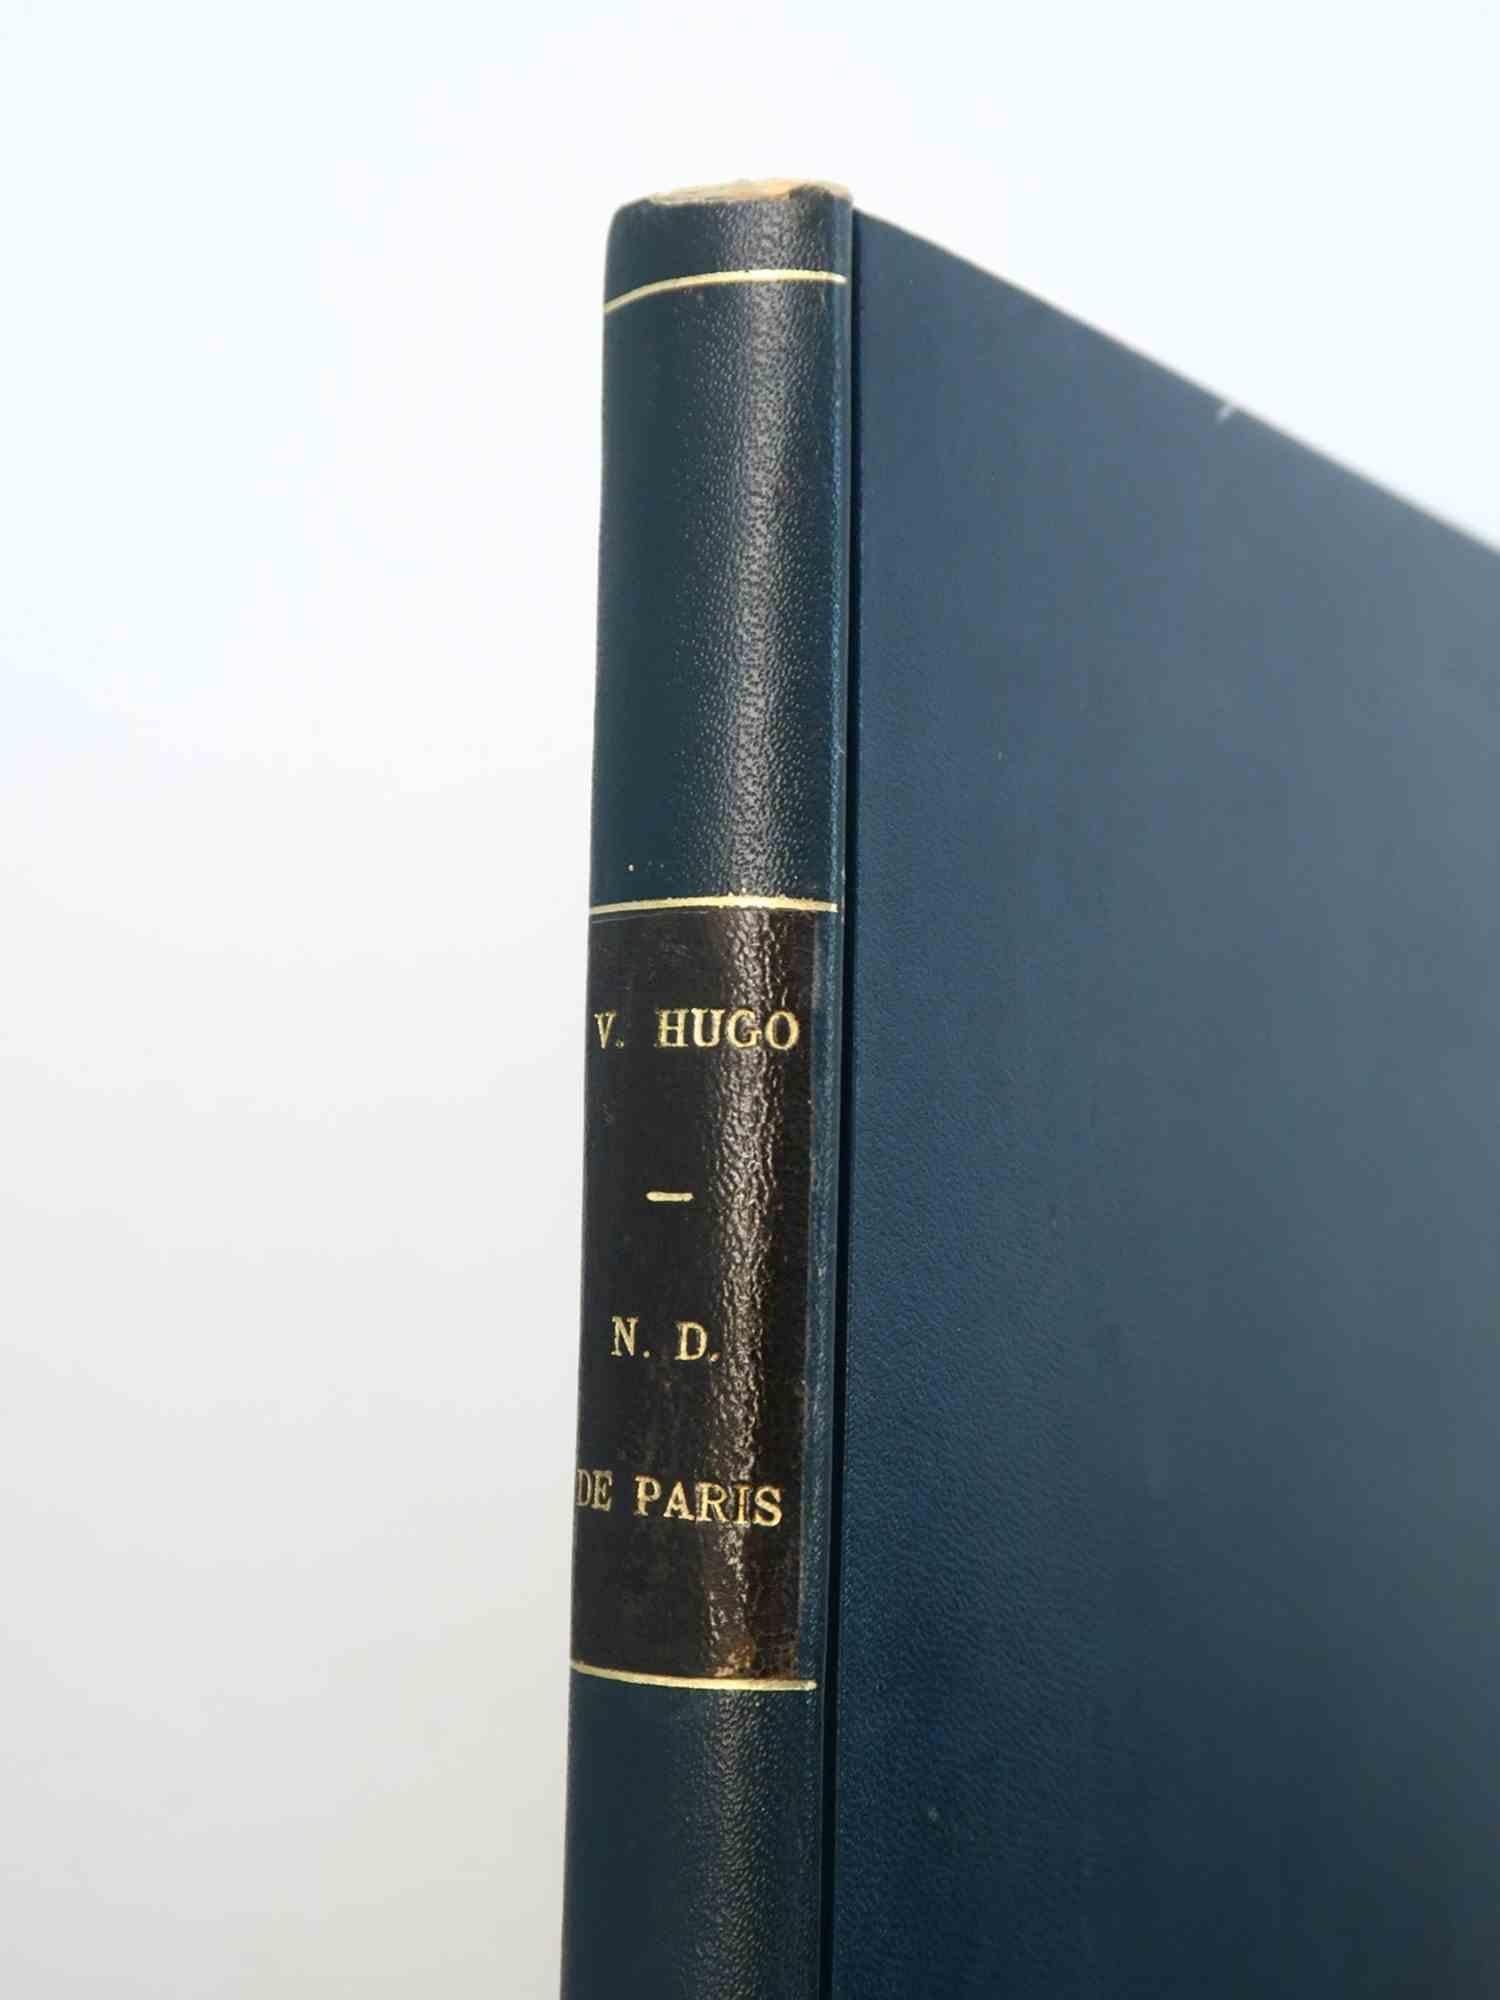 Notre Dame de Paris - Rare Book by Victor Hugo - 1865 For Sale 2